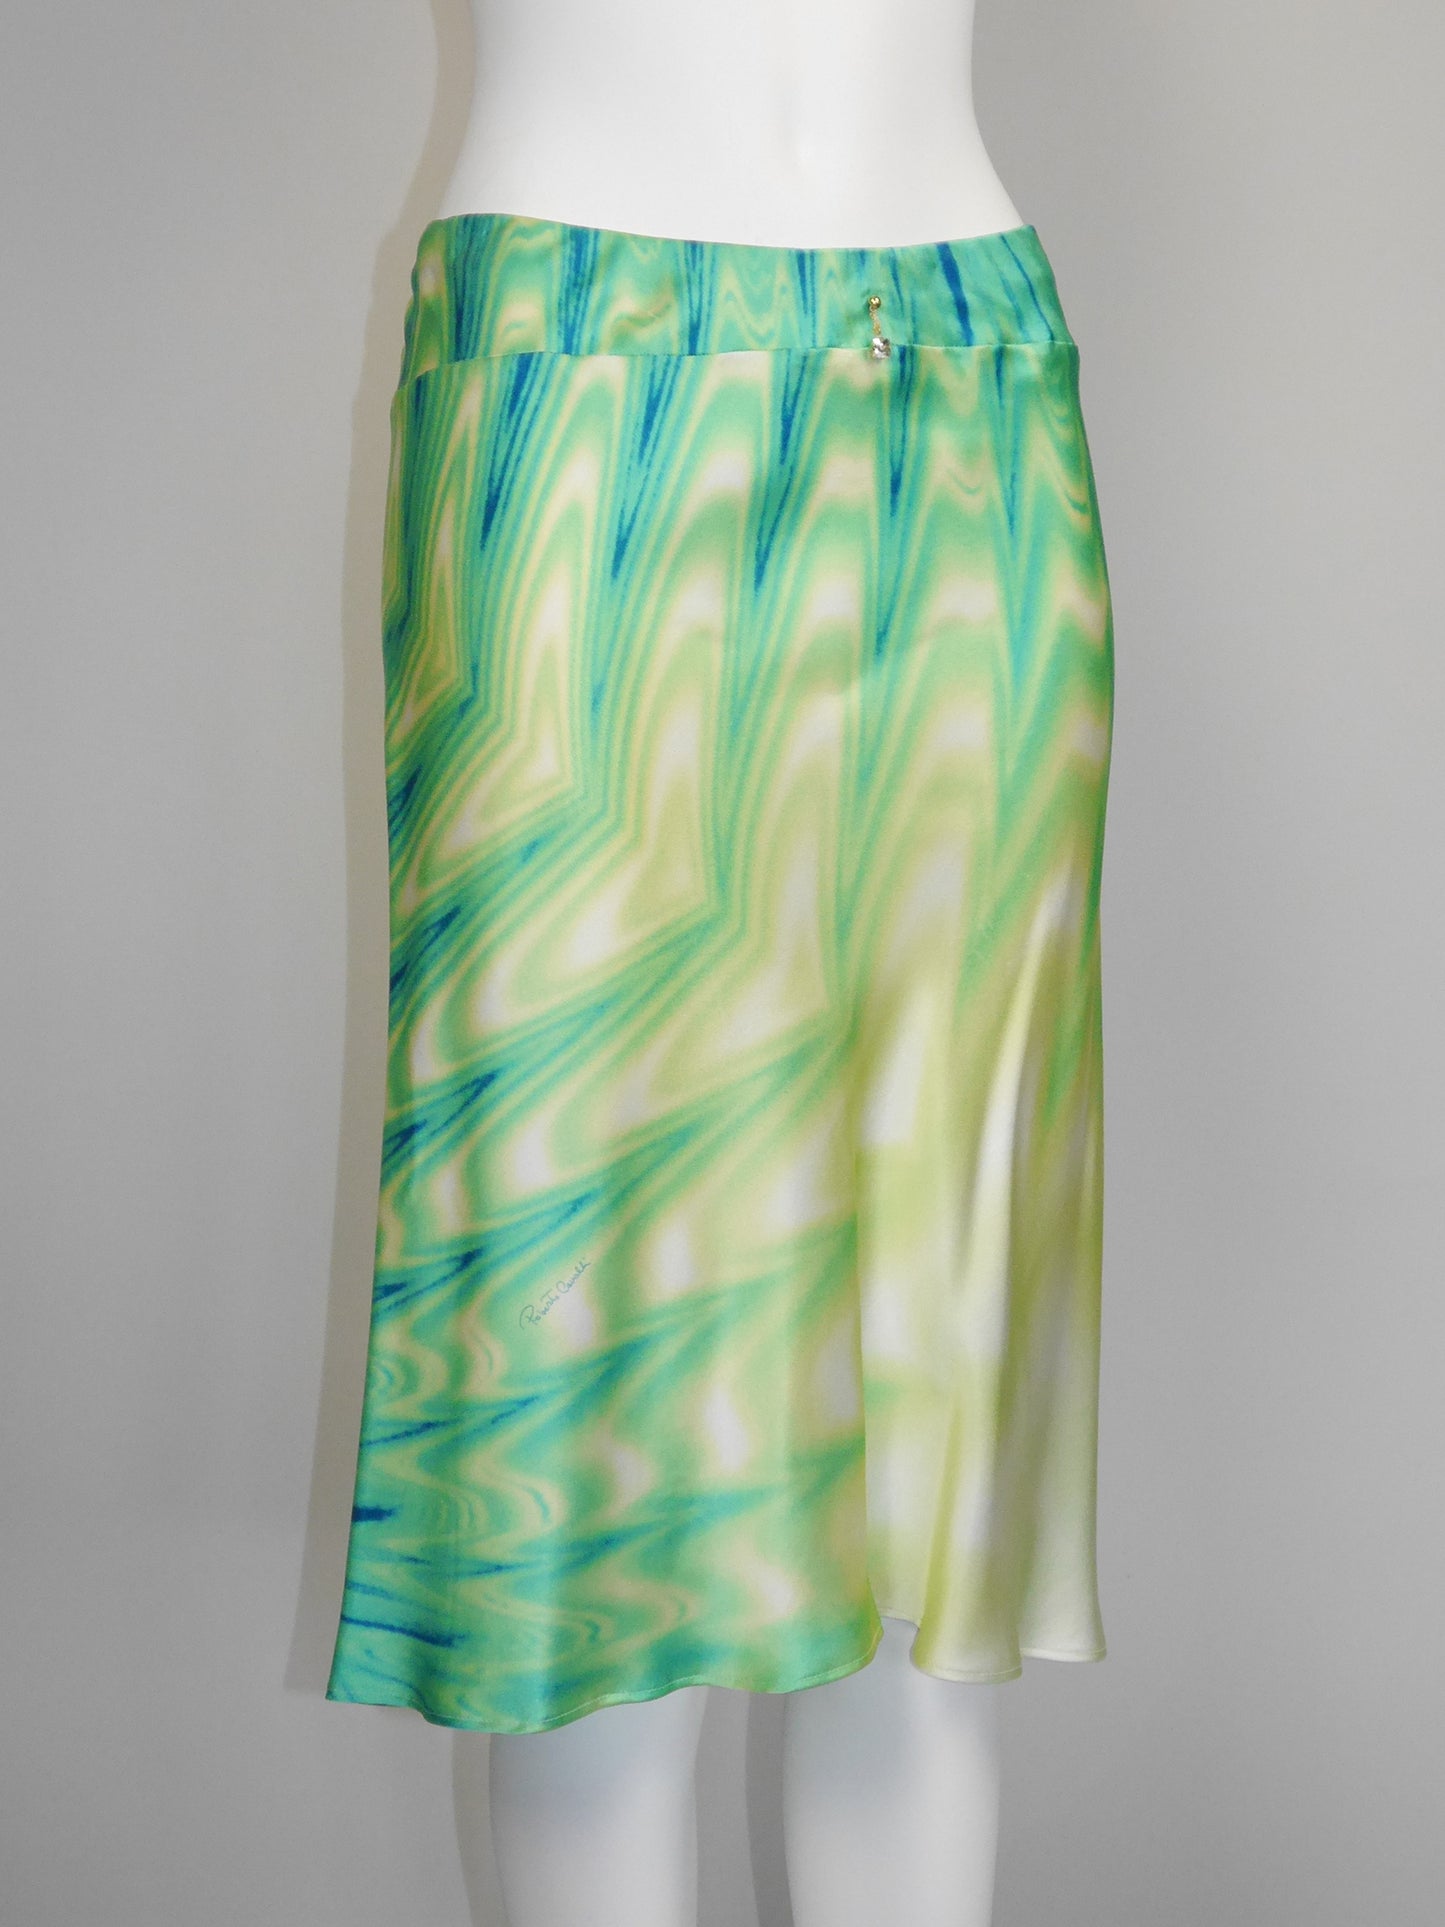 ROBERTO CAVALLI Spring 2001 Vintage Psychedelic Print Silk Skirt Size S